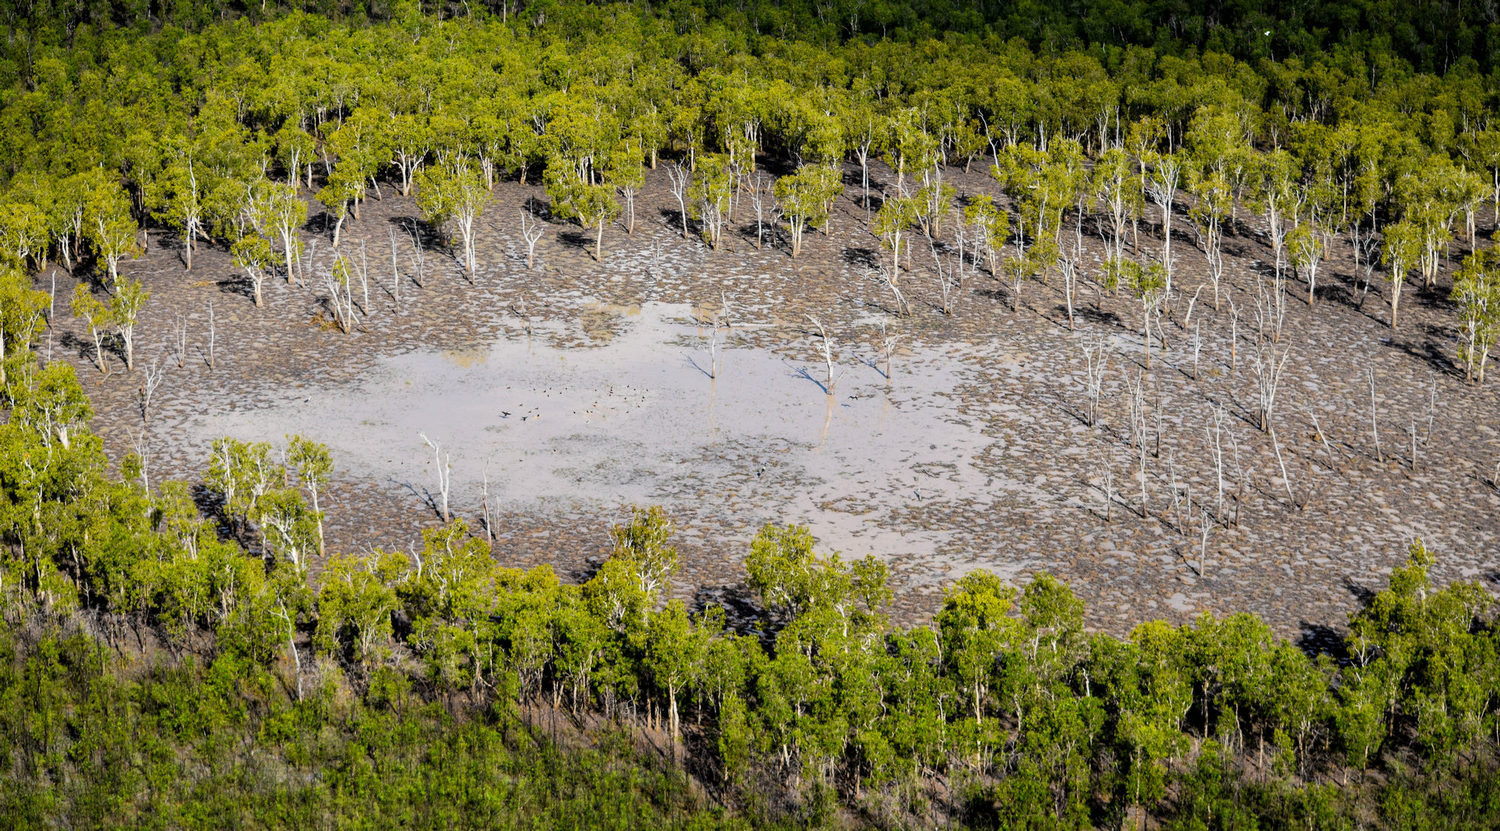 aerial image of muddy swamp with pig damage